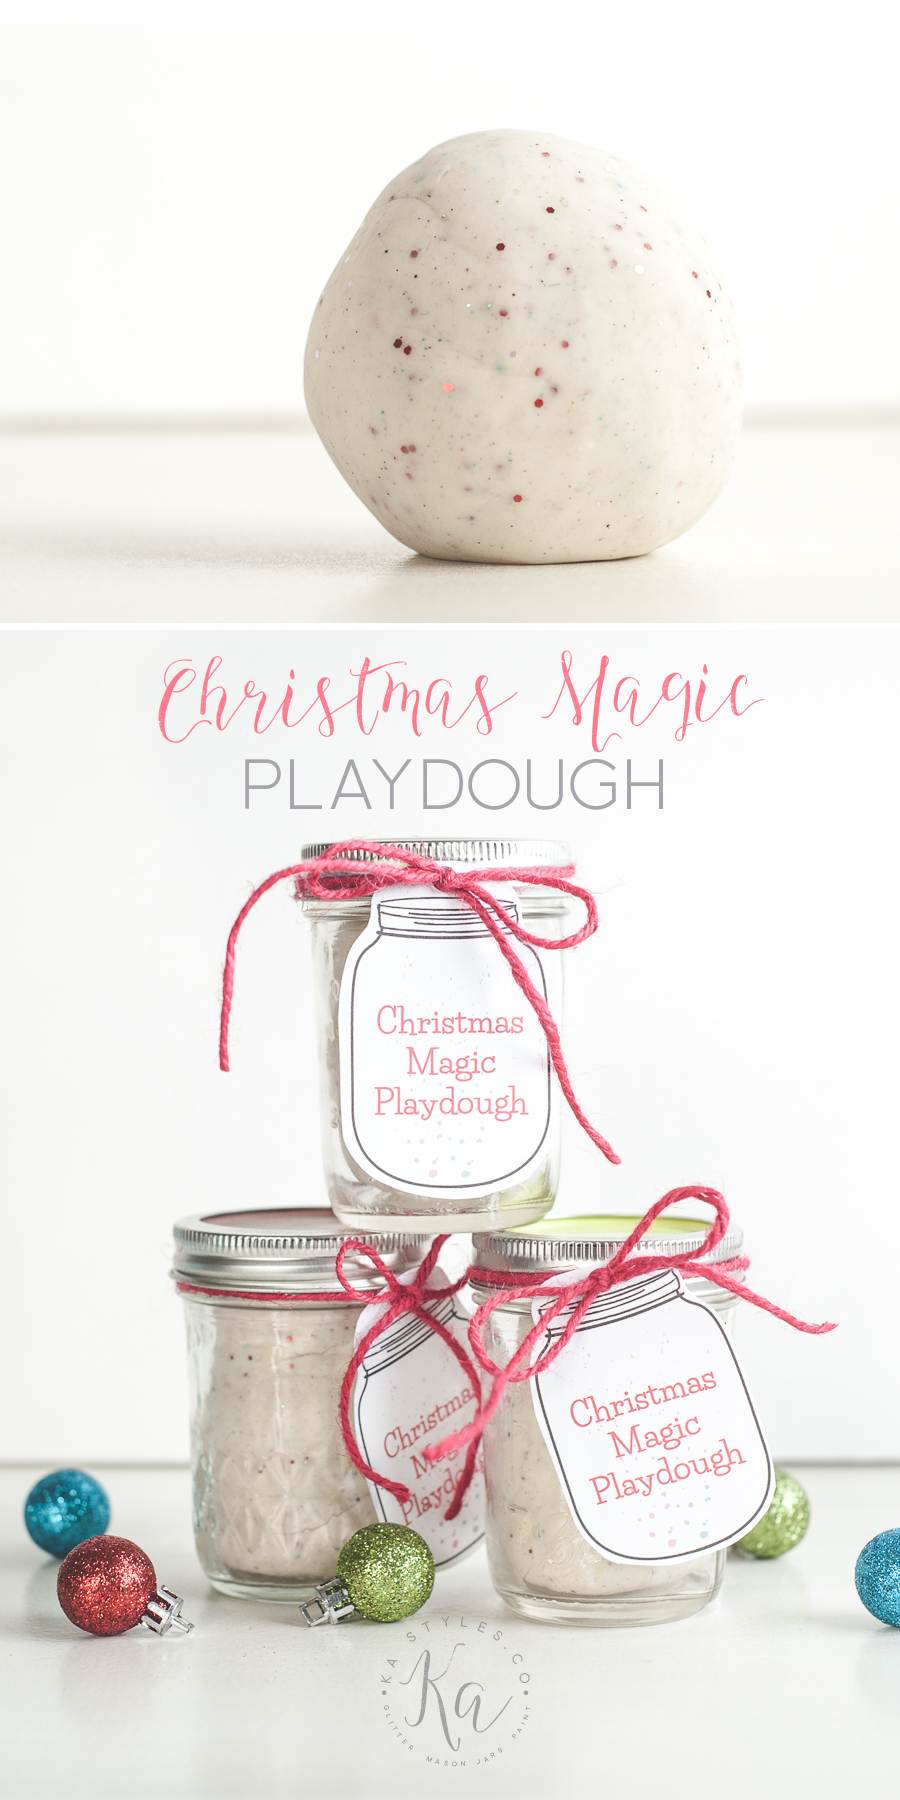 DIY playdough recipe with printable gift tag.